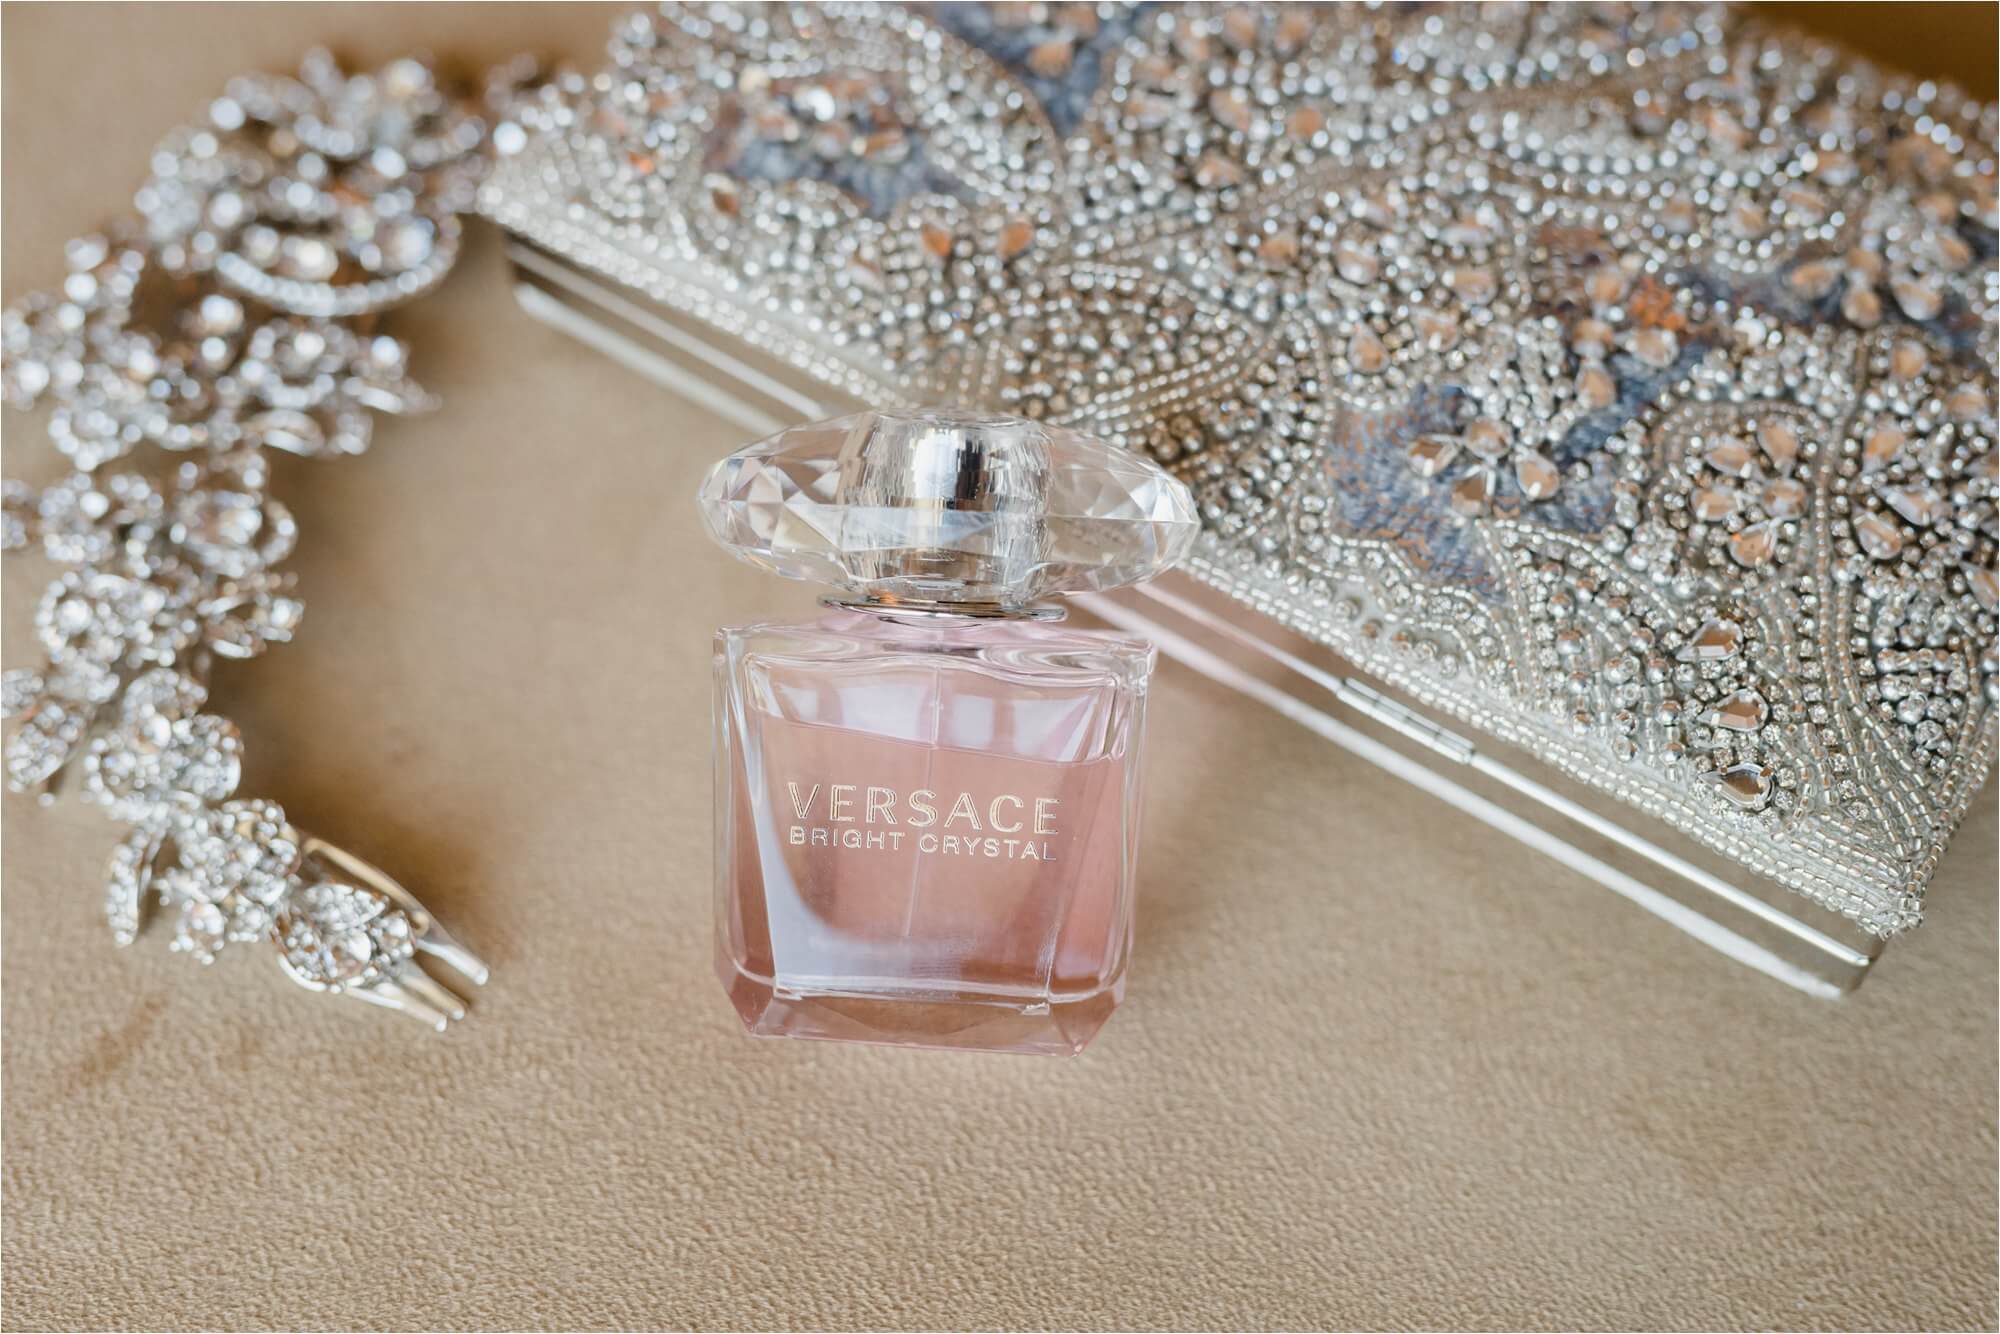 Versace Wedding Perfume and clutch